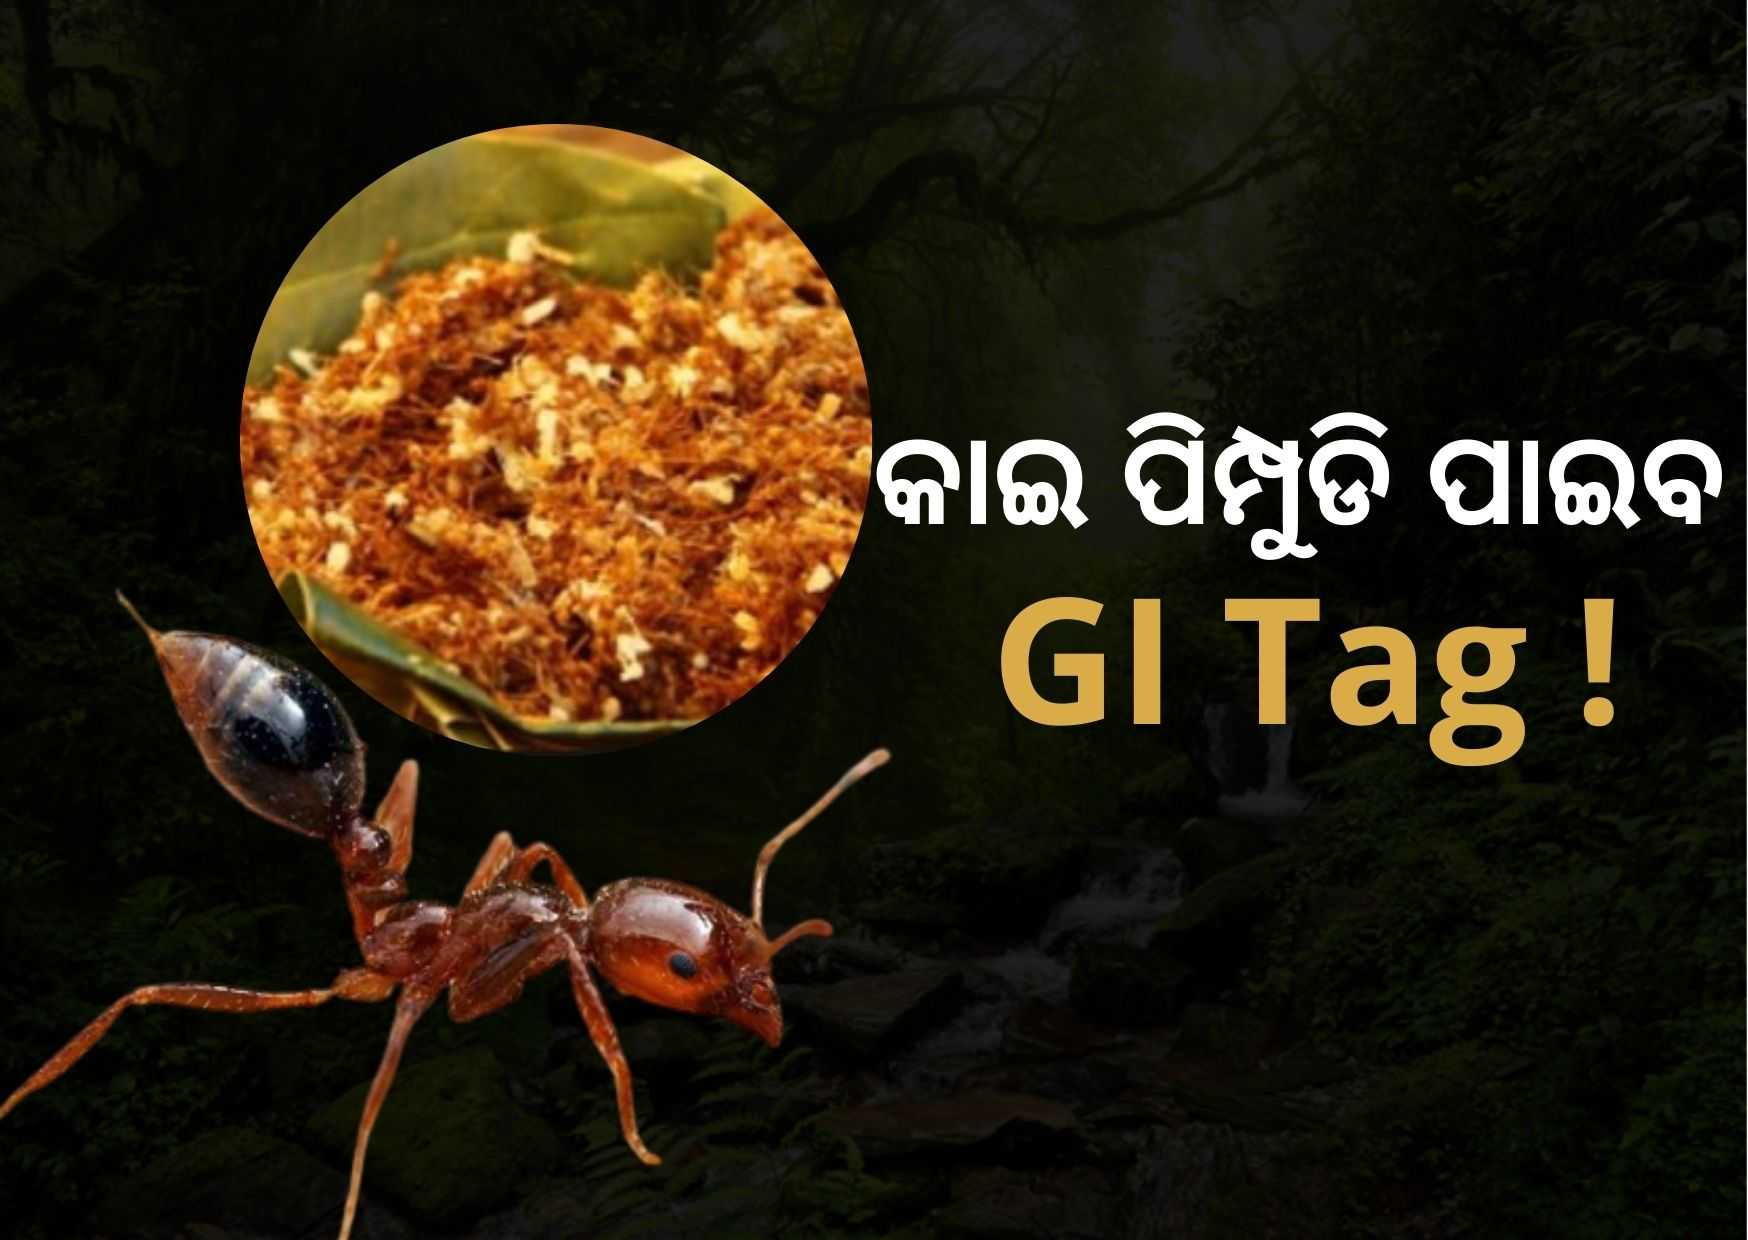 odishas red ant chutney seeks gi tag